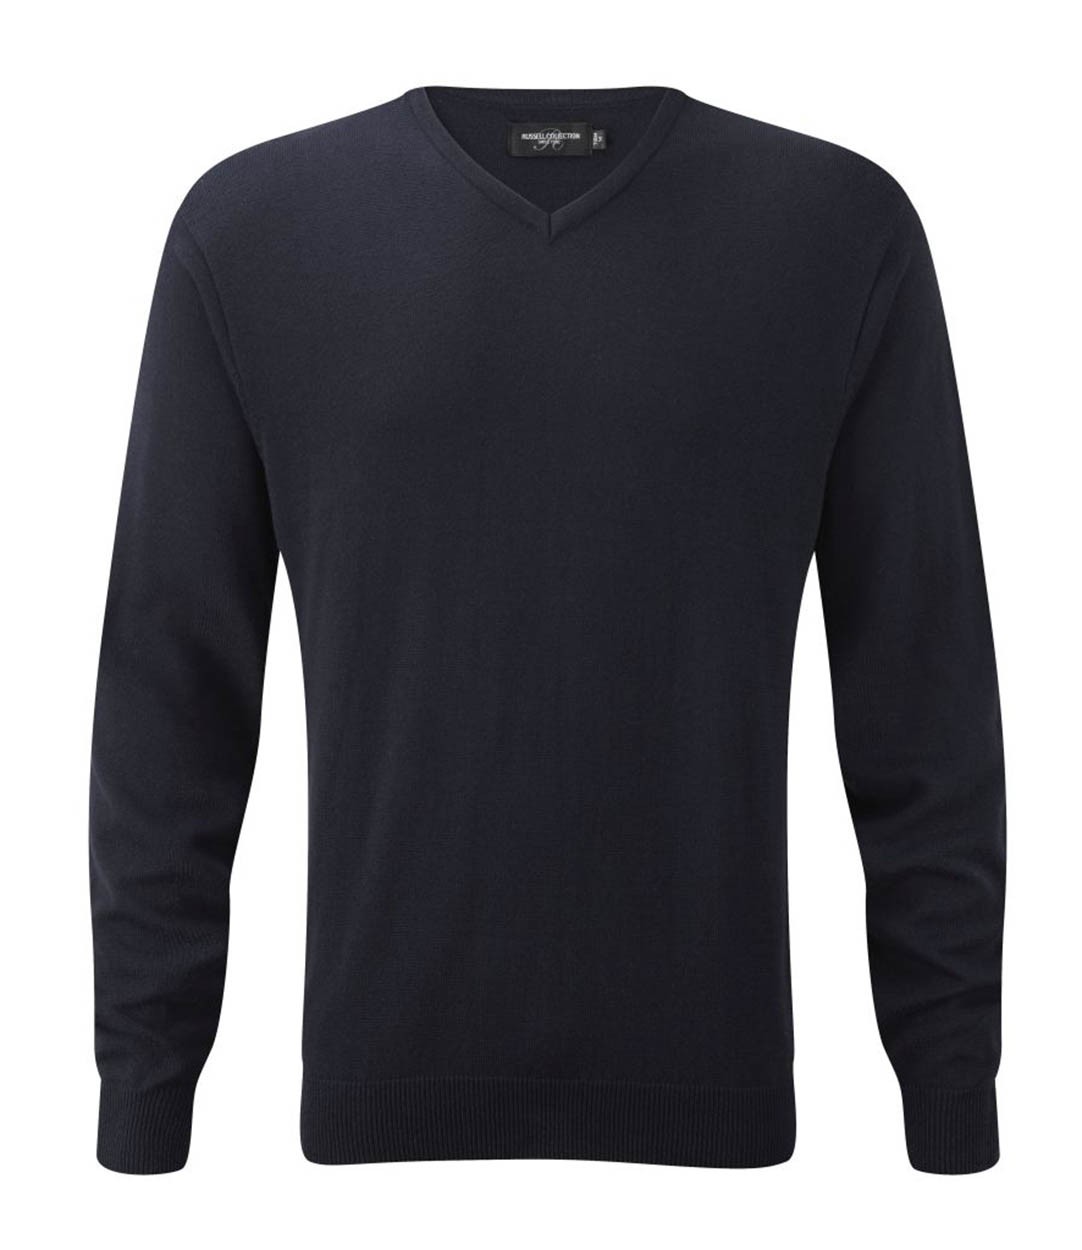 Russell Collection 710M V Neck Sweater - Unisex / Men's Sweaters - Knitwear  - Leisurewear - Best Workwear